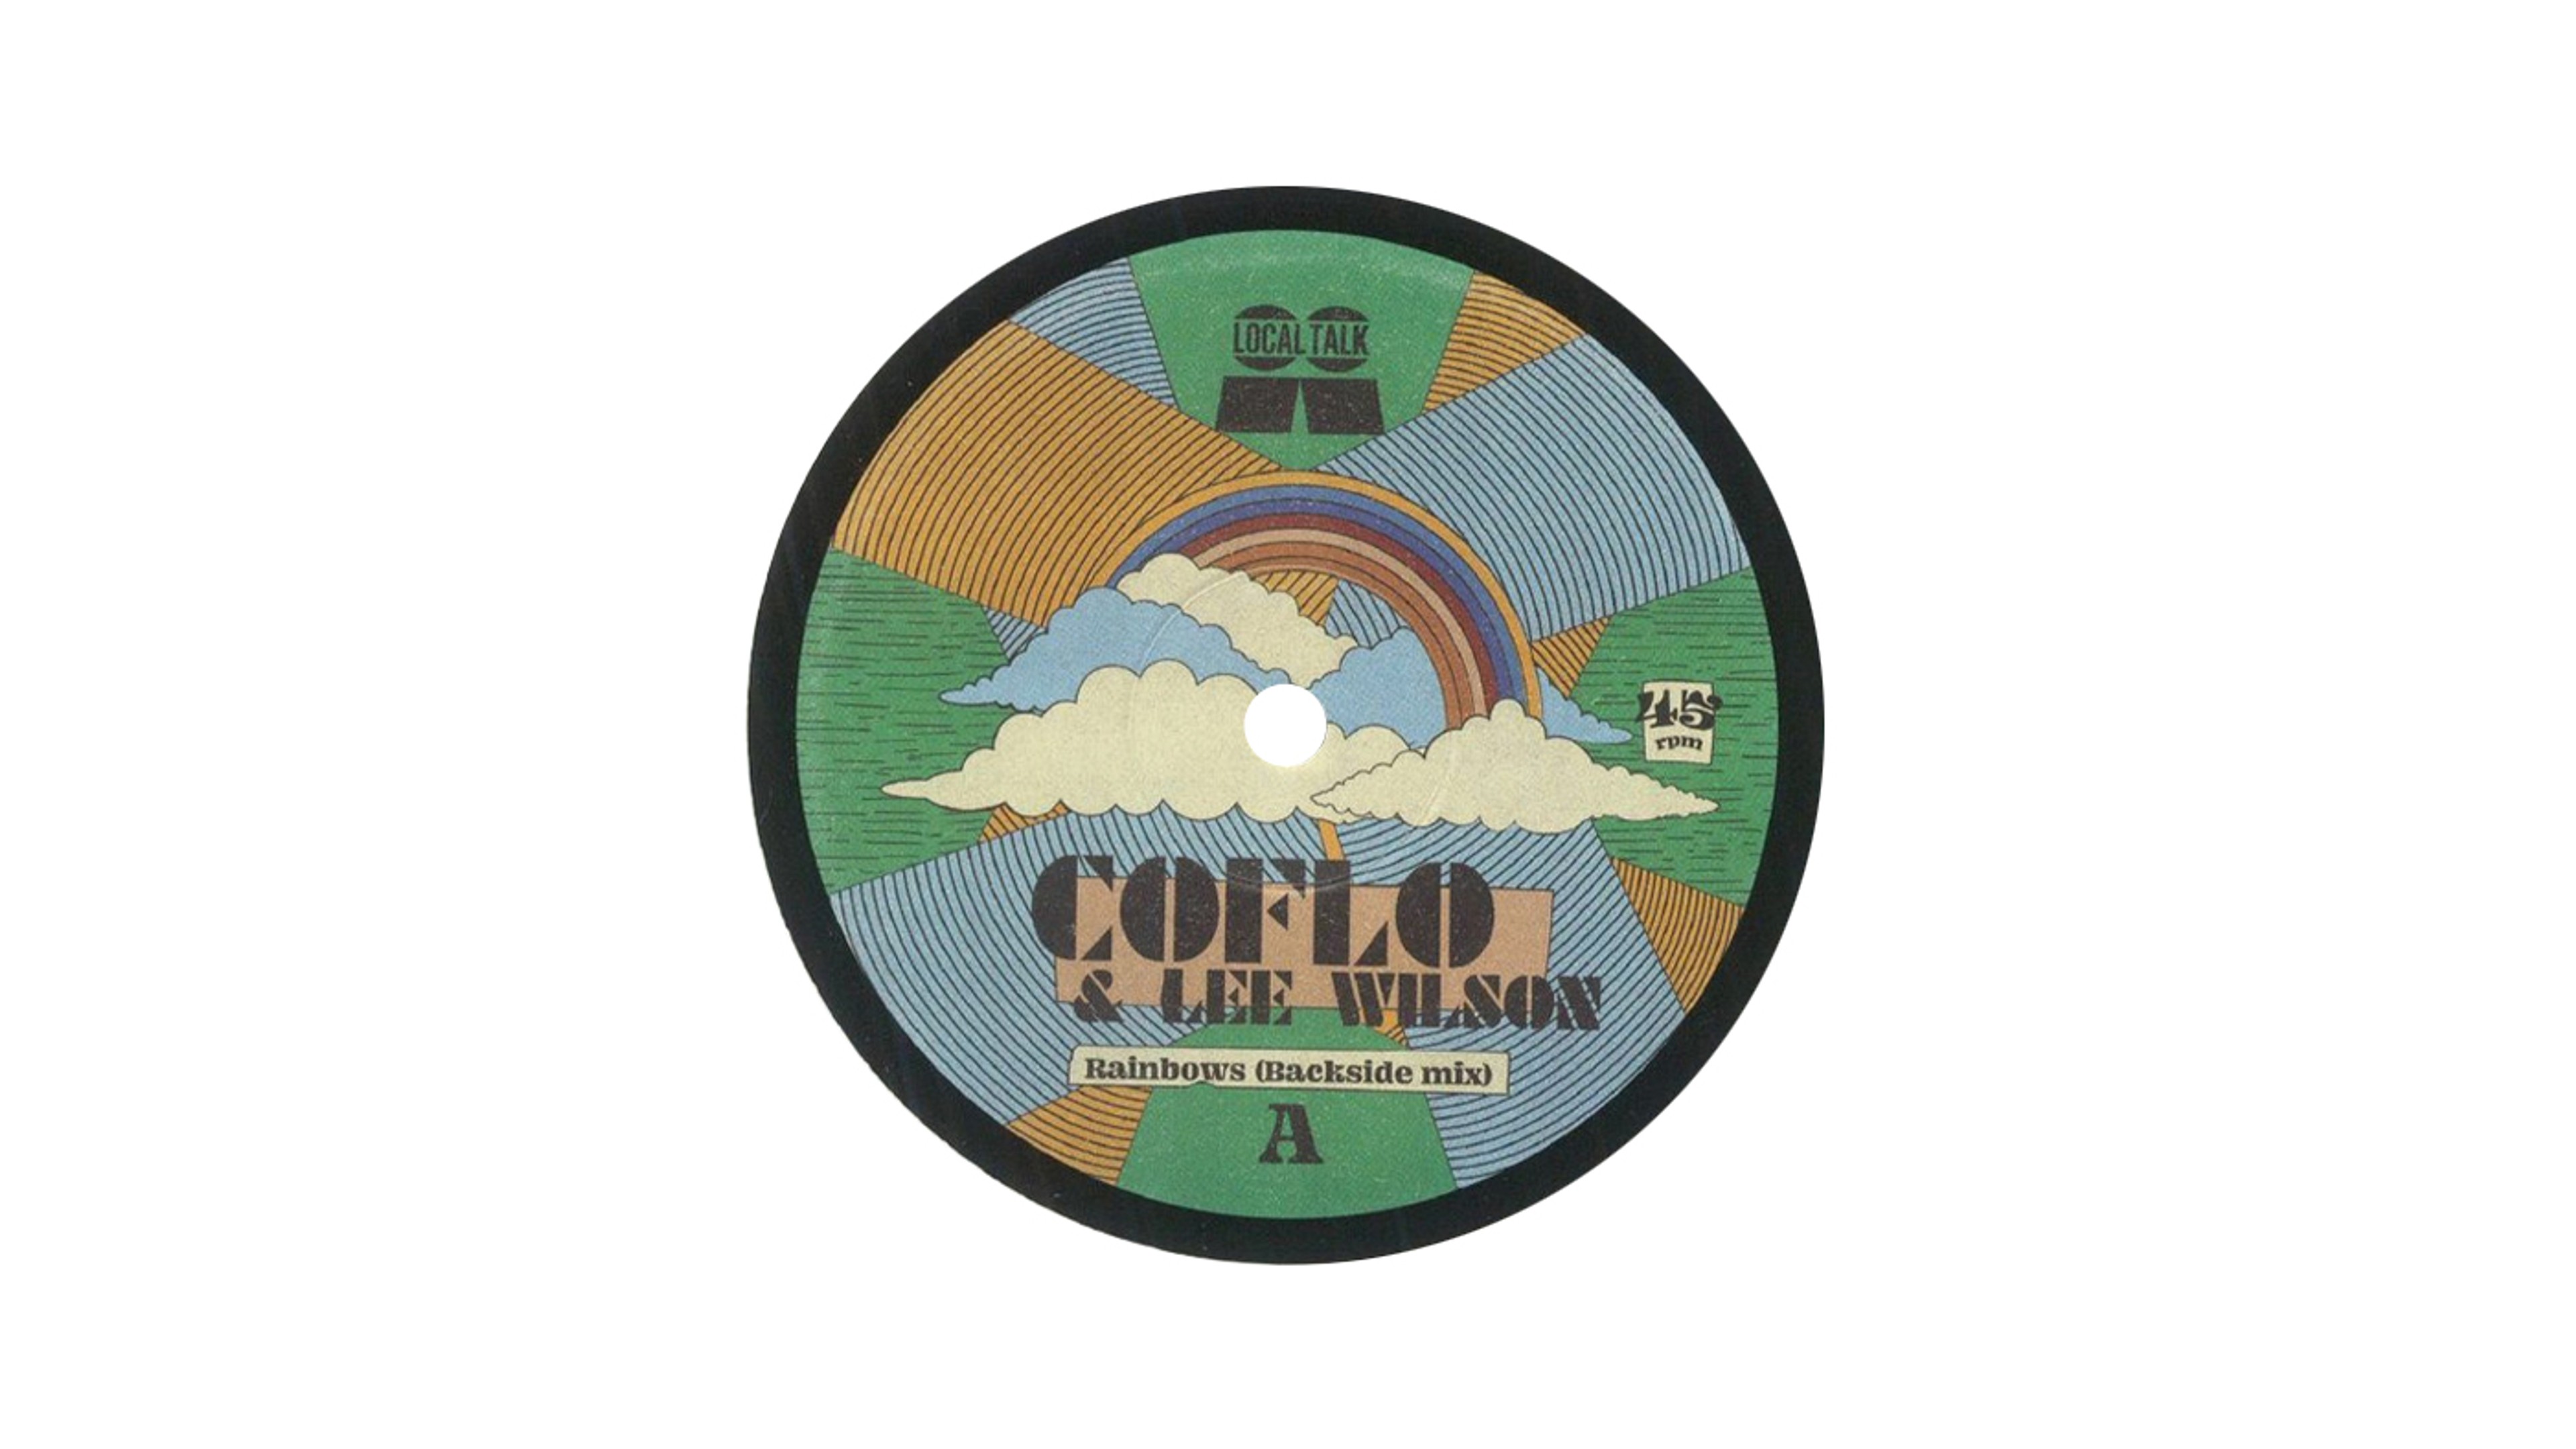 Coflo feat. Lee Wilson - Rainbows (Backside Mix)